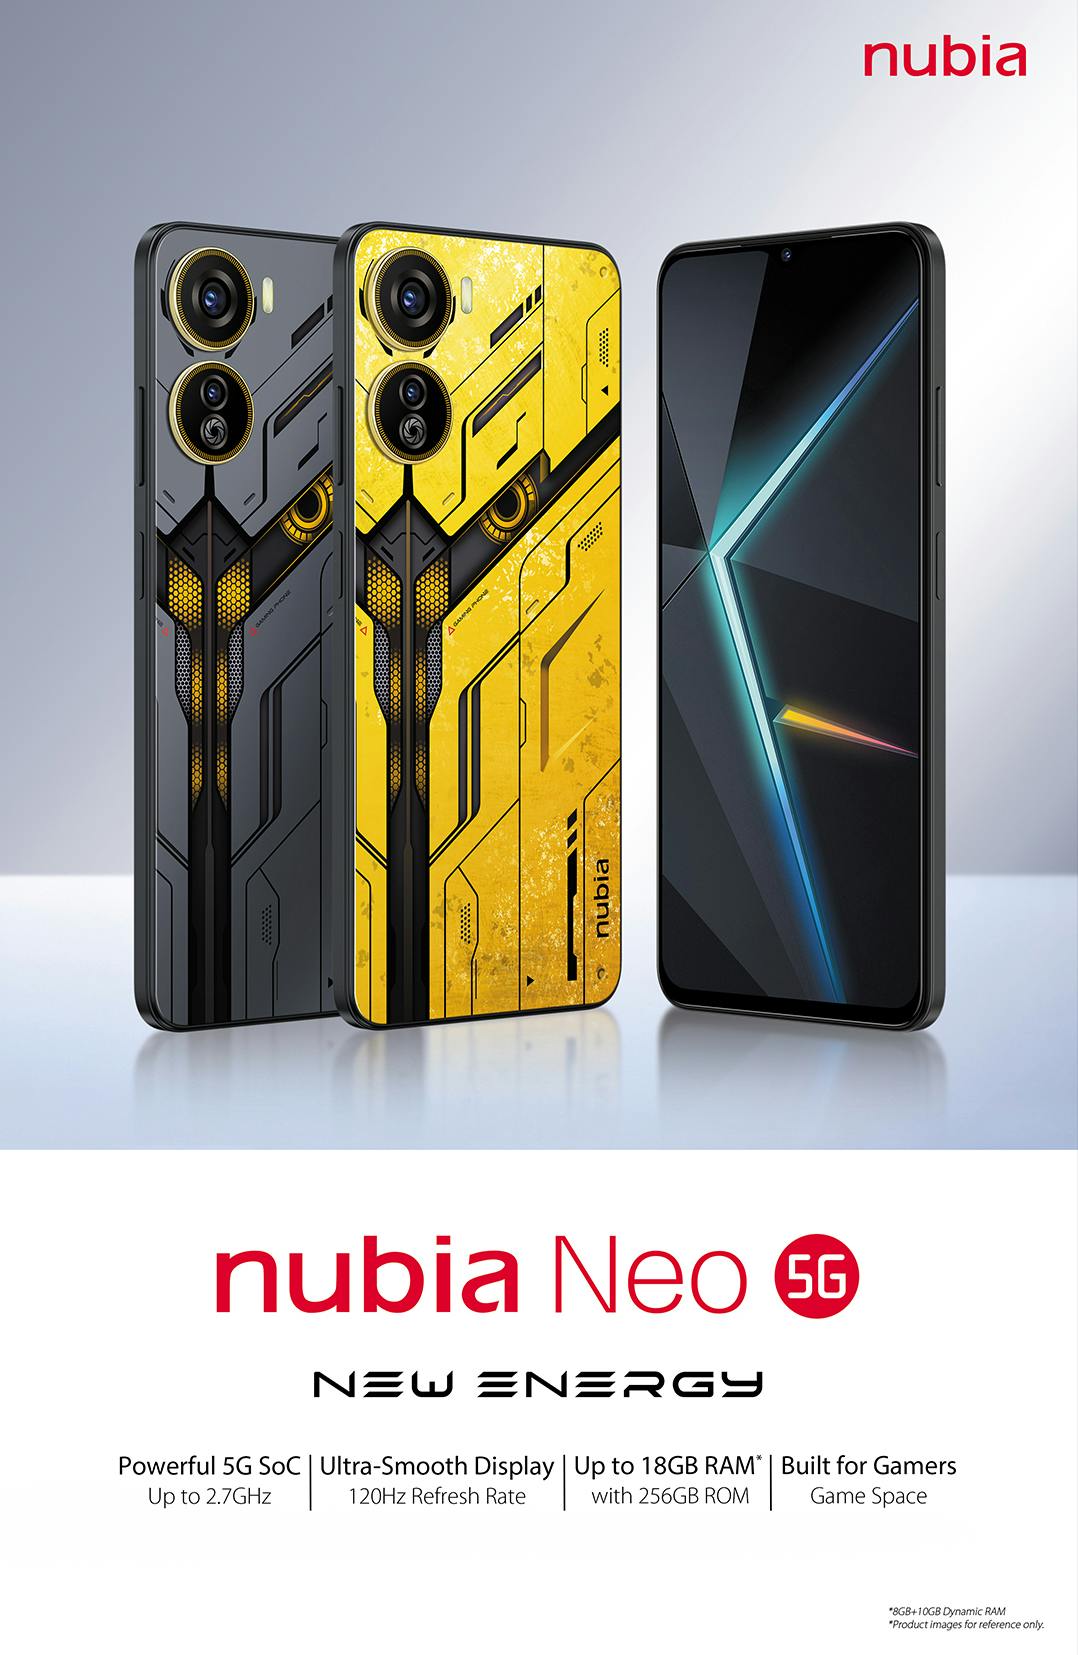 nubia Z50 - Specifications